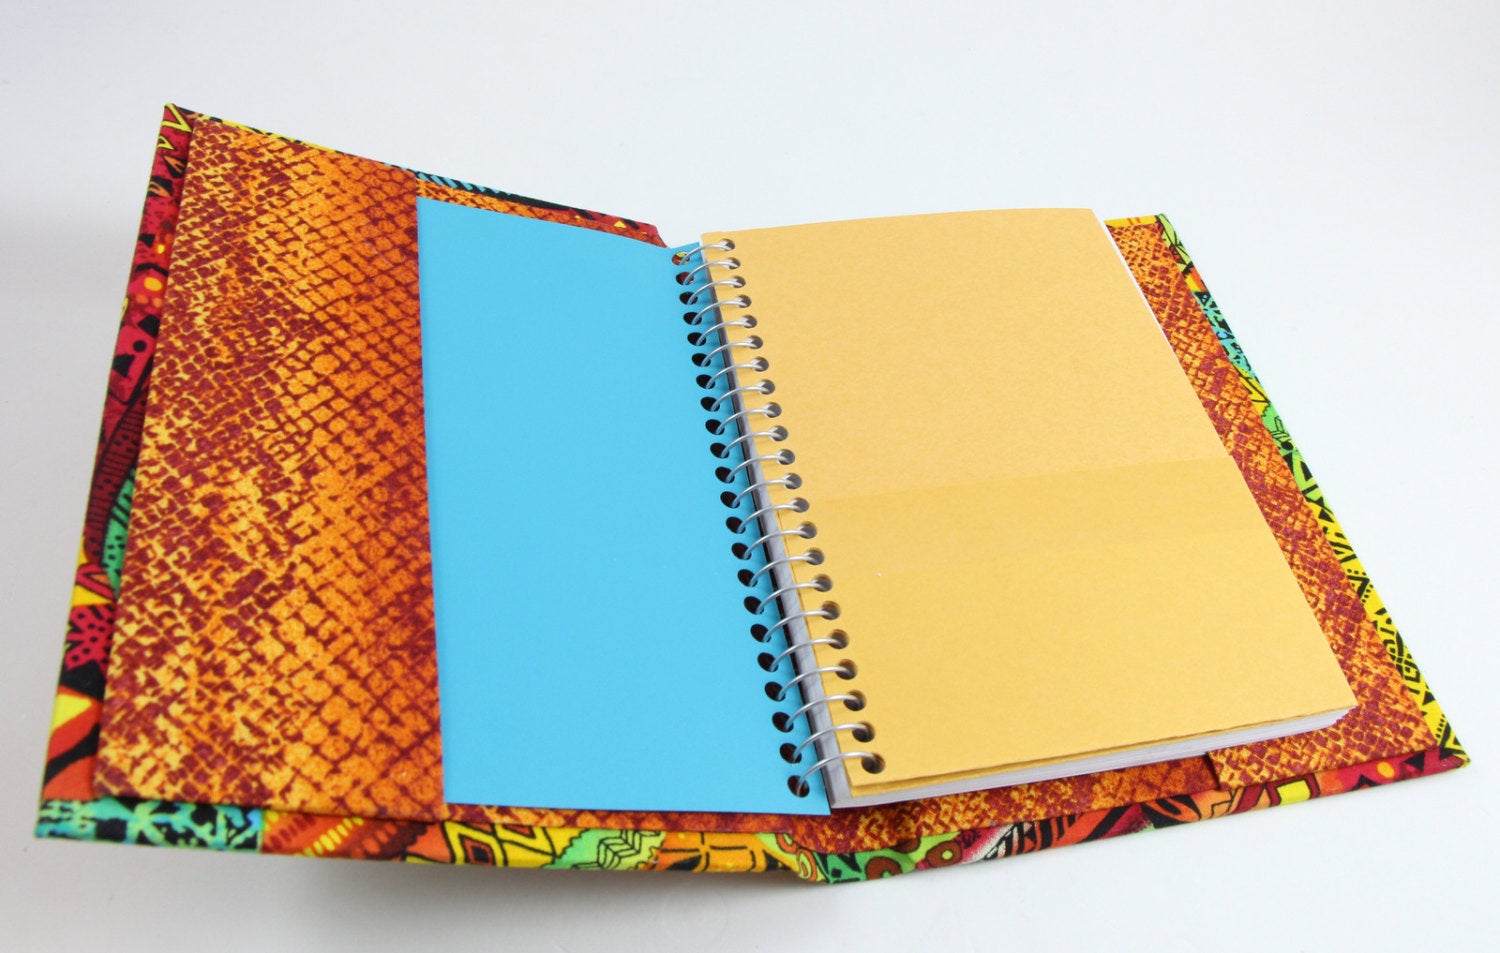  COOPHYA 1 Roll Book Band DIY Kits Book Binding Fabric